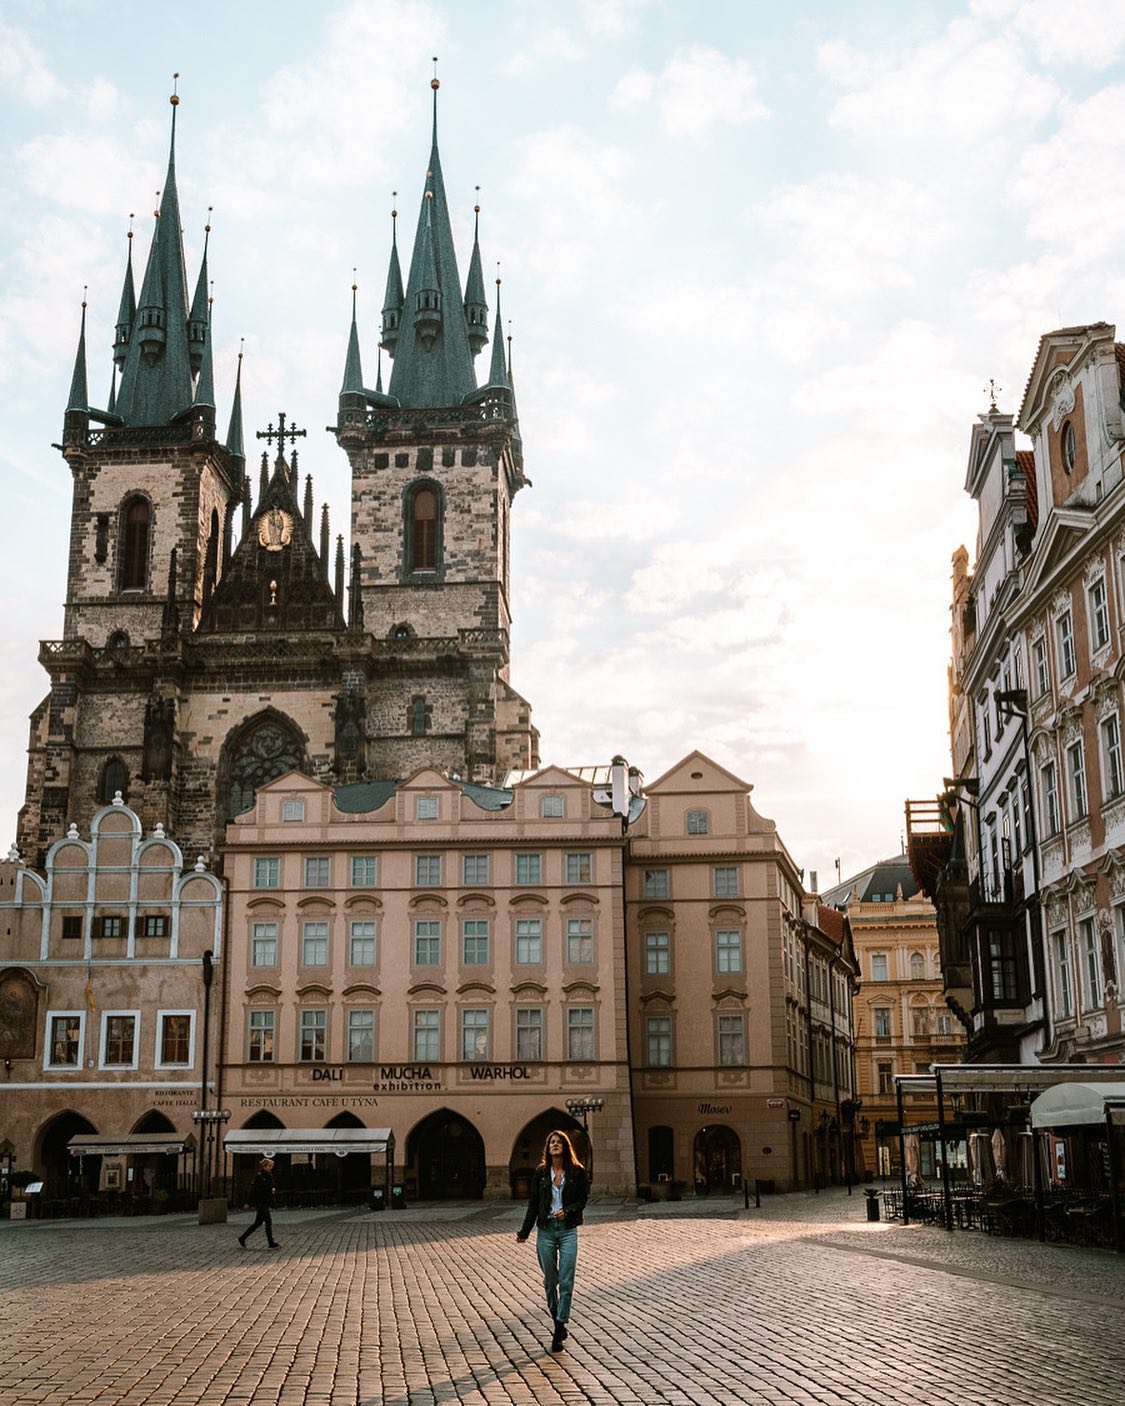 Memories of the most perfect mornings exploring Prague. 🇨🇿

#pragueworld #praguecz #pragueczechrepublic #praguetoday ##praguecity